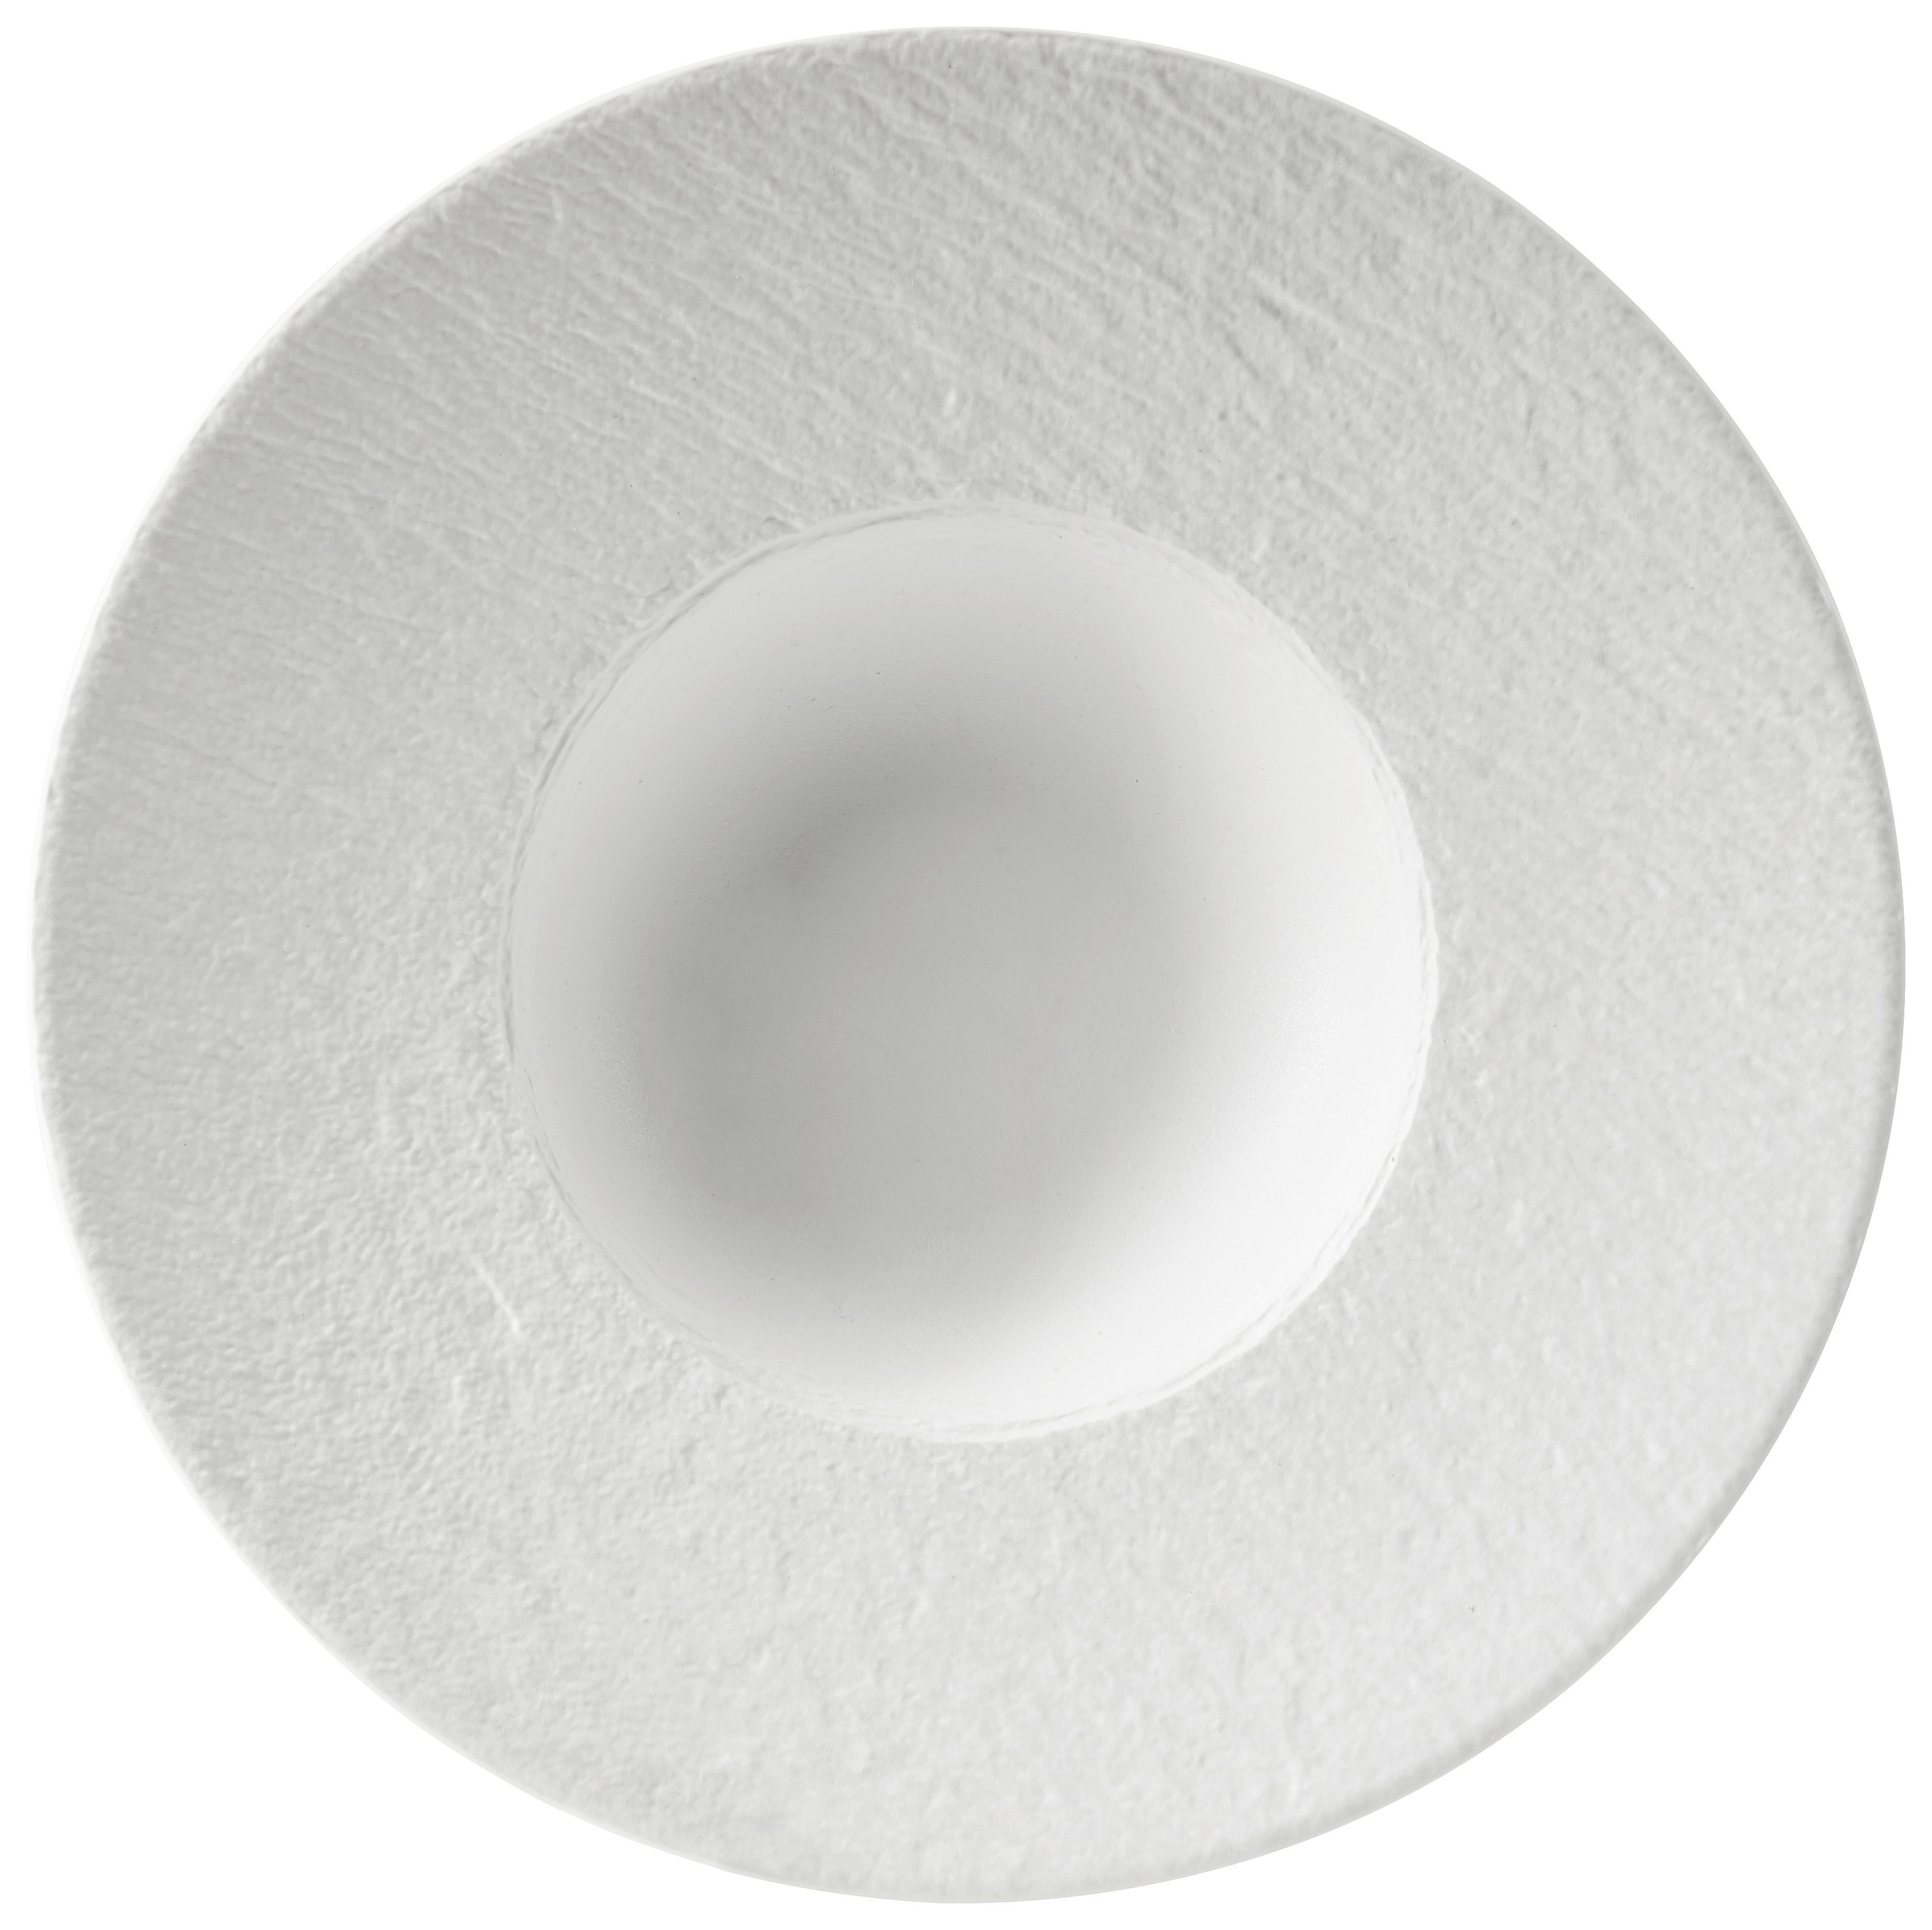 TANIER NA CESTOVINY, keramika, 29 cm - biela, Design, keramika (29cm) - Villeroy & Boch